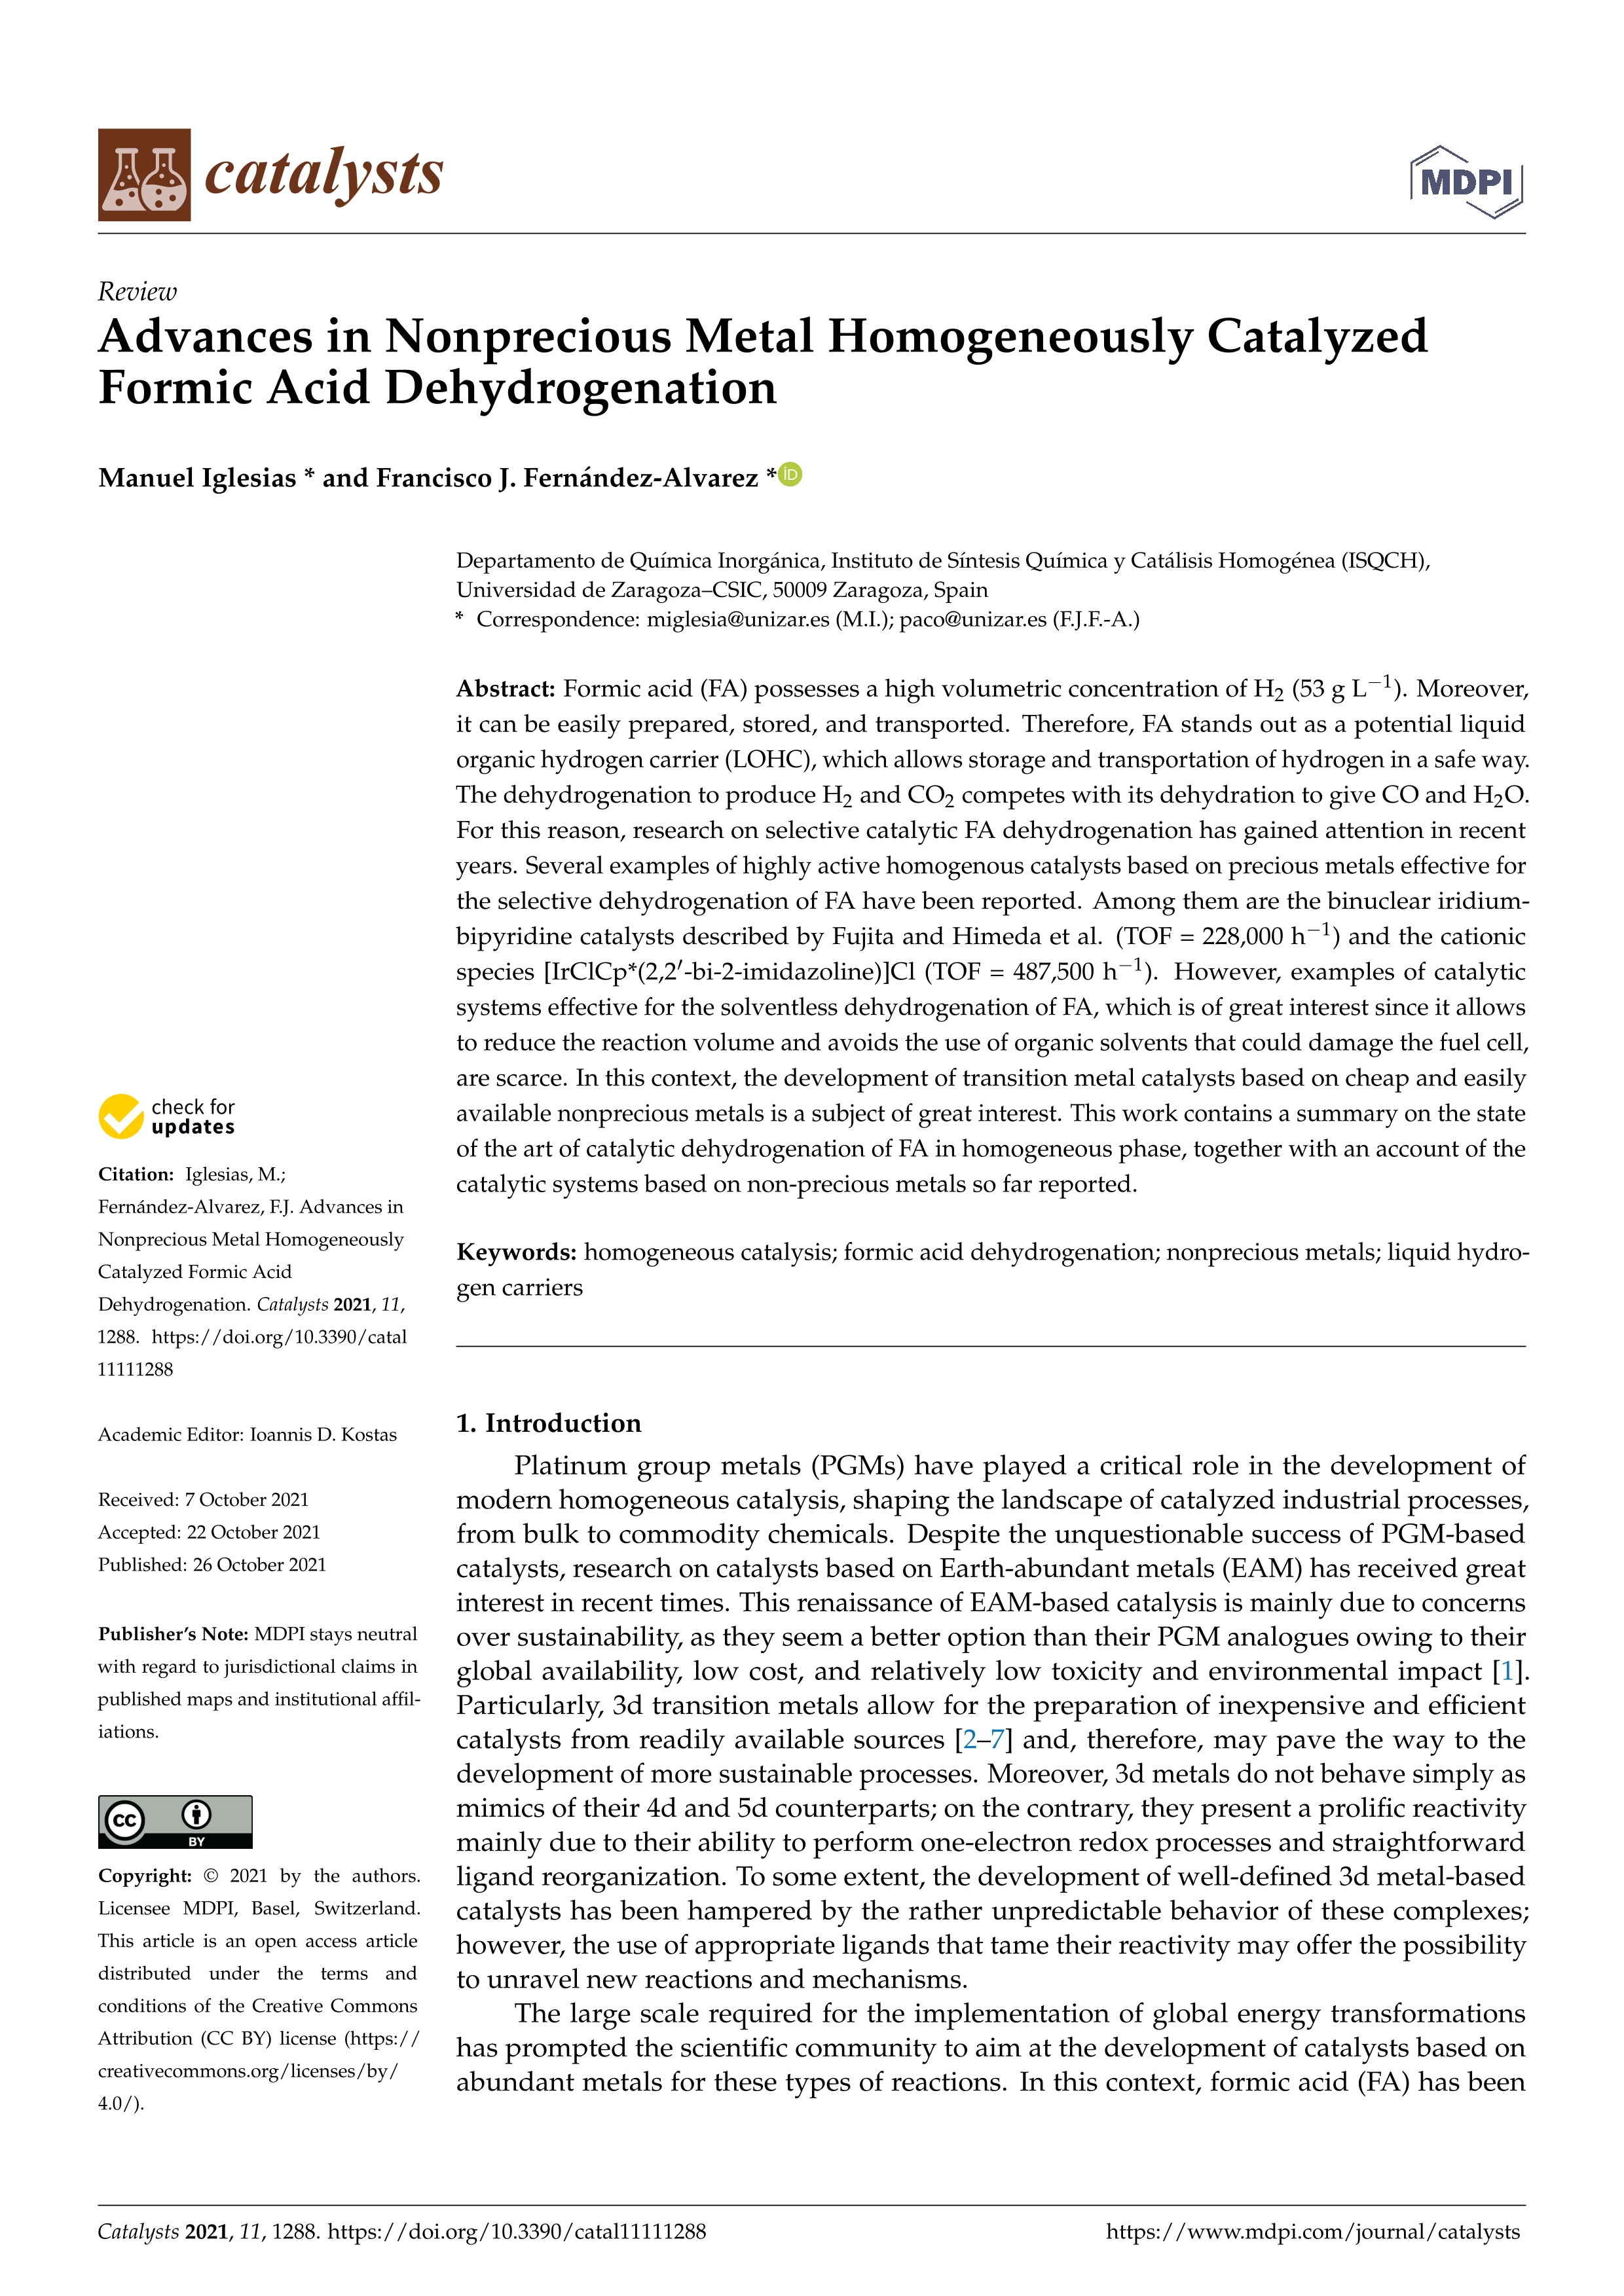 Advances in nonprecious metal homogeneously catalyzed formic acid dehydrogenation